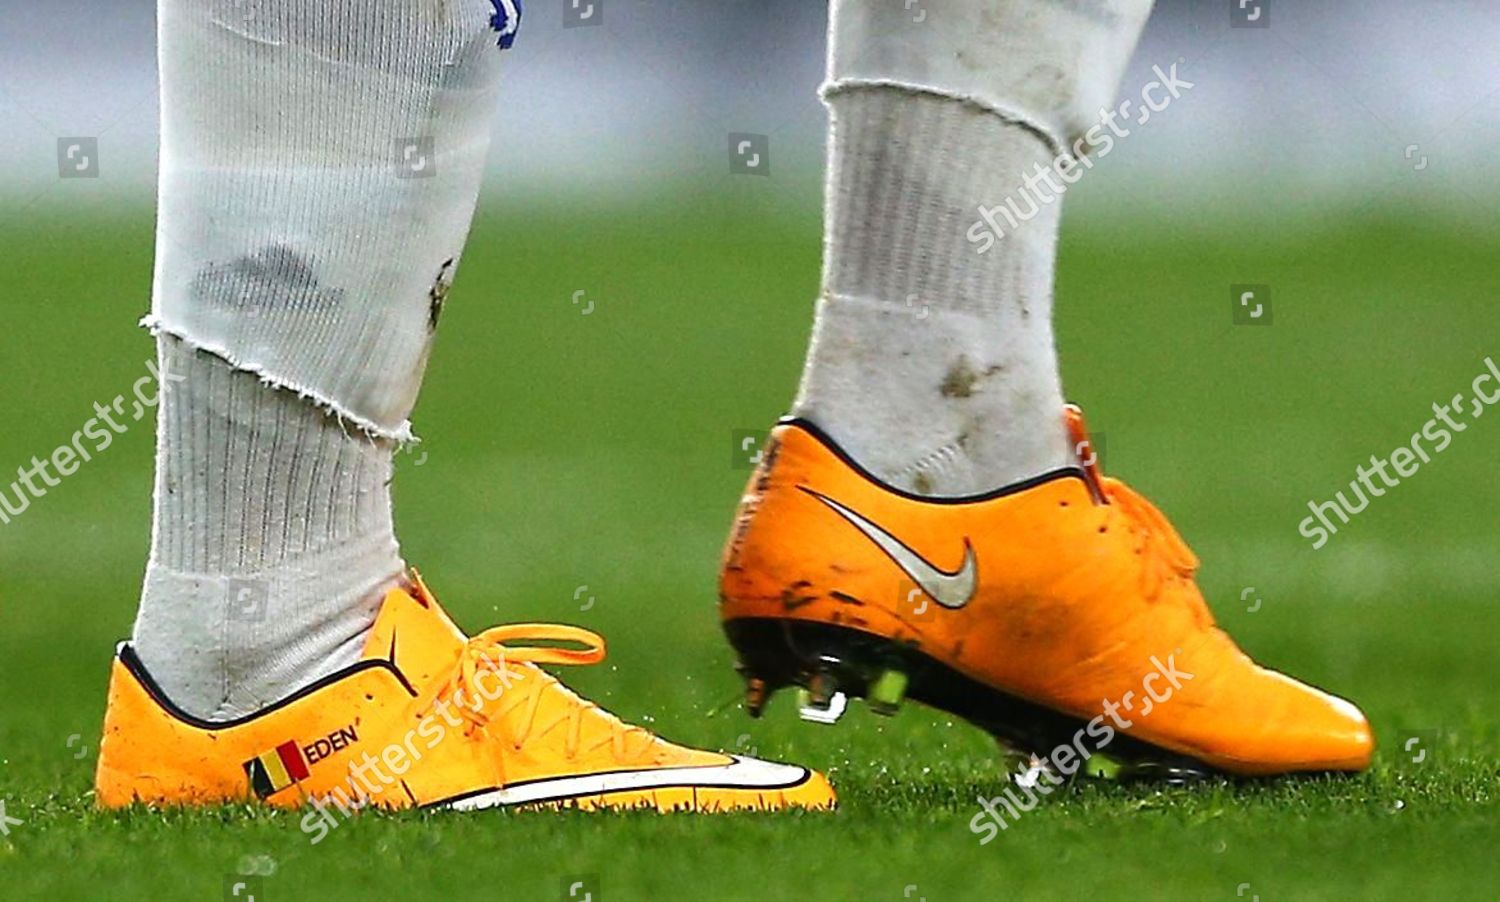 Limón cebra Cambiable Personalised Nike Football Boots Eden Hazard - Foto de stock de contenido  editorial: imagen de stock | Shutterstock Editorial